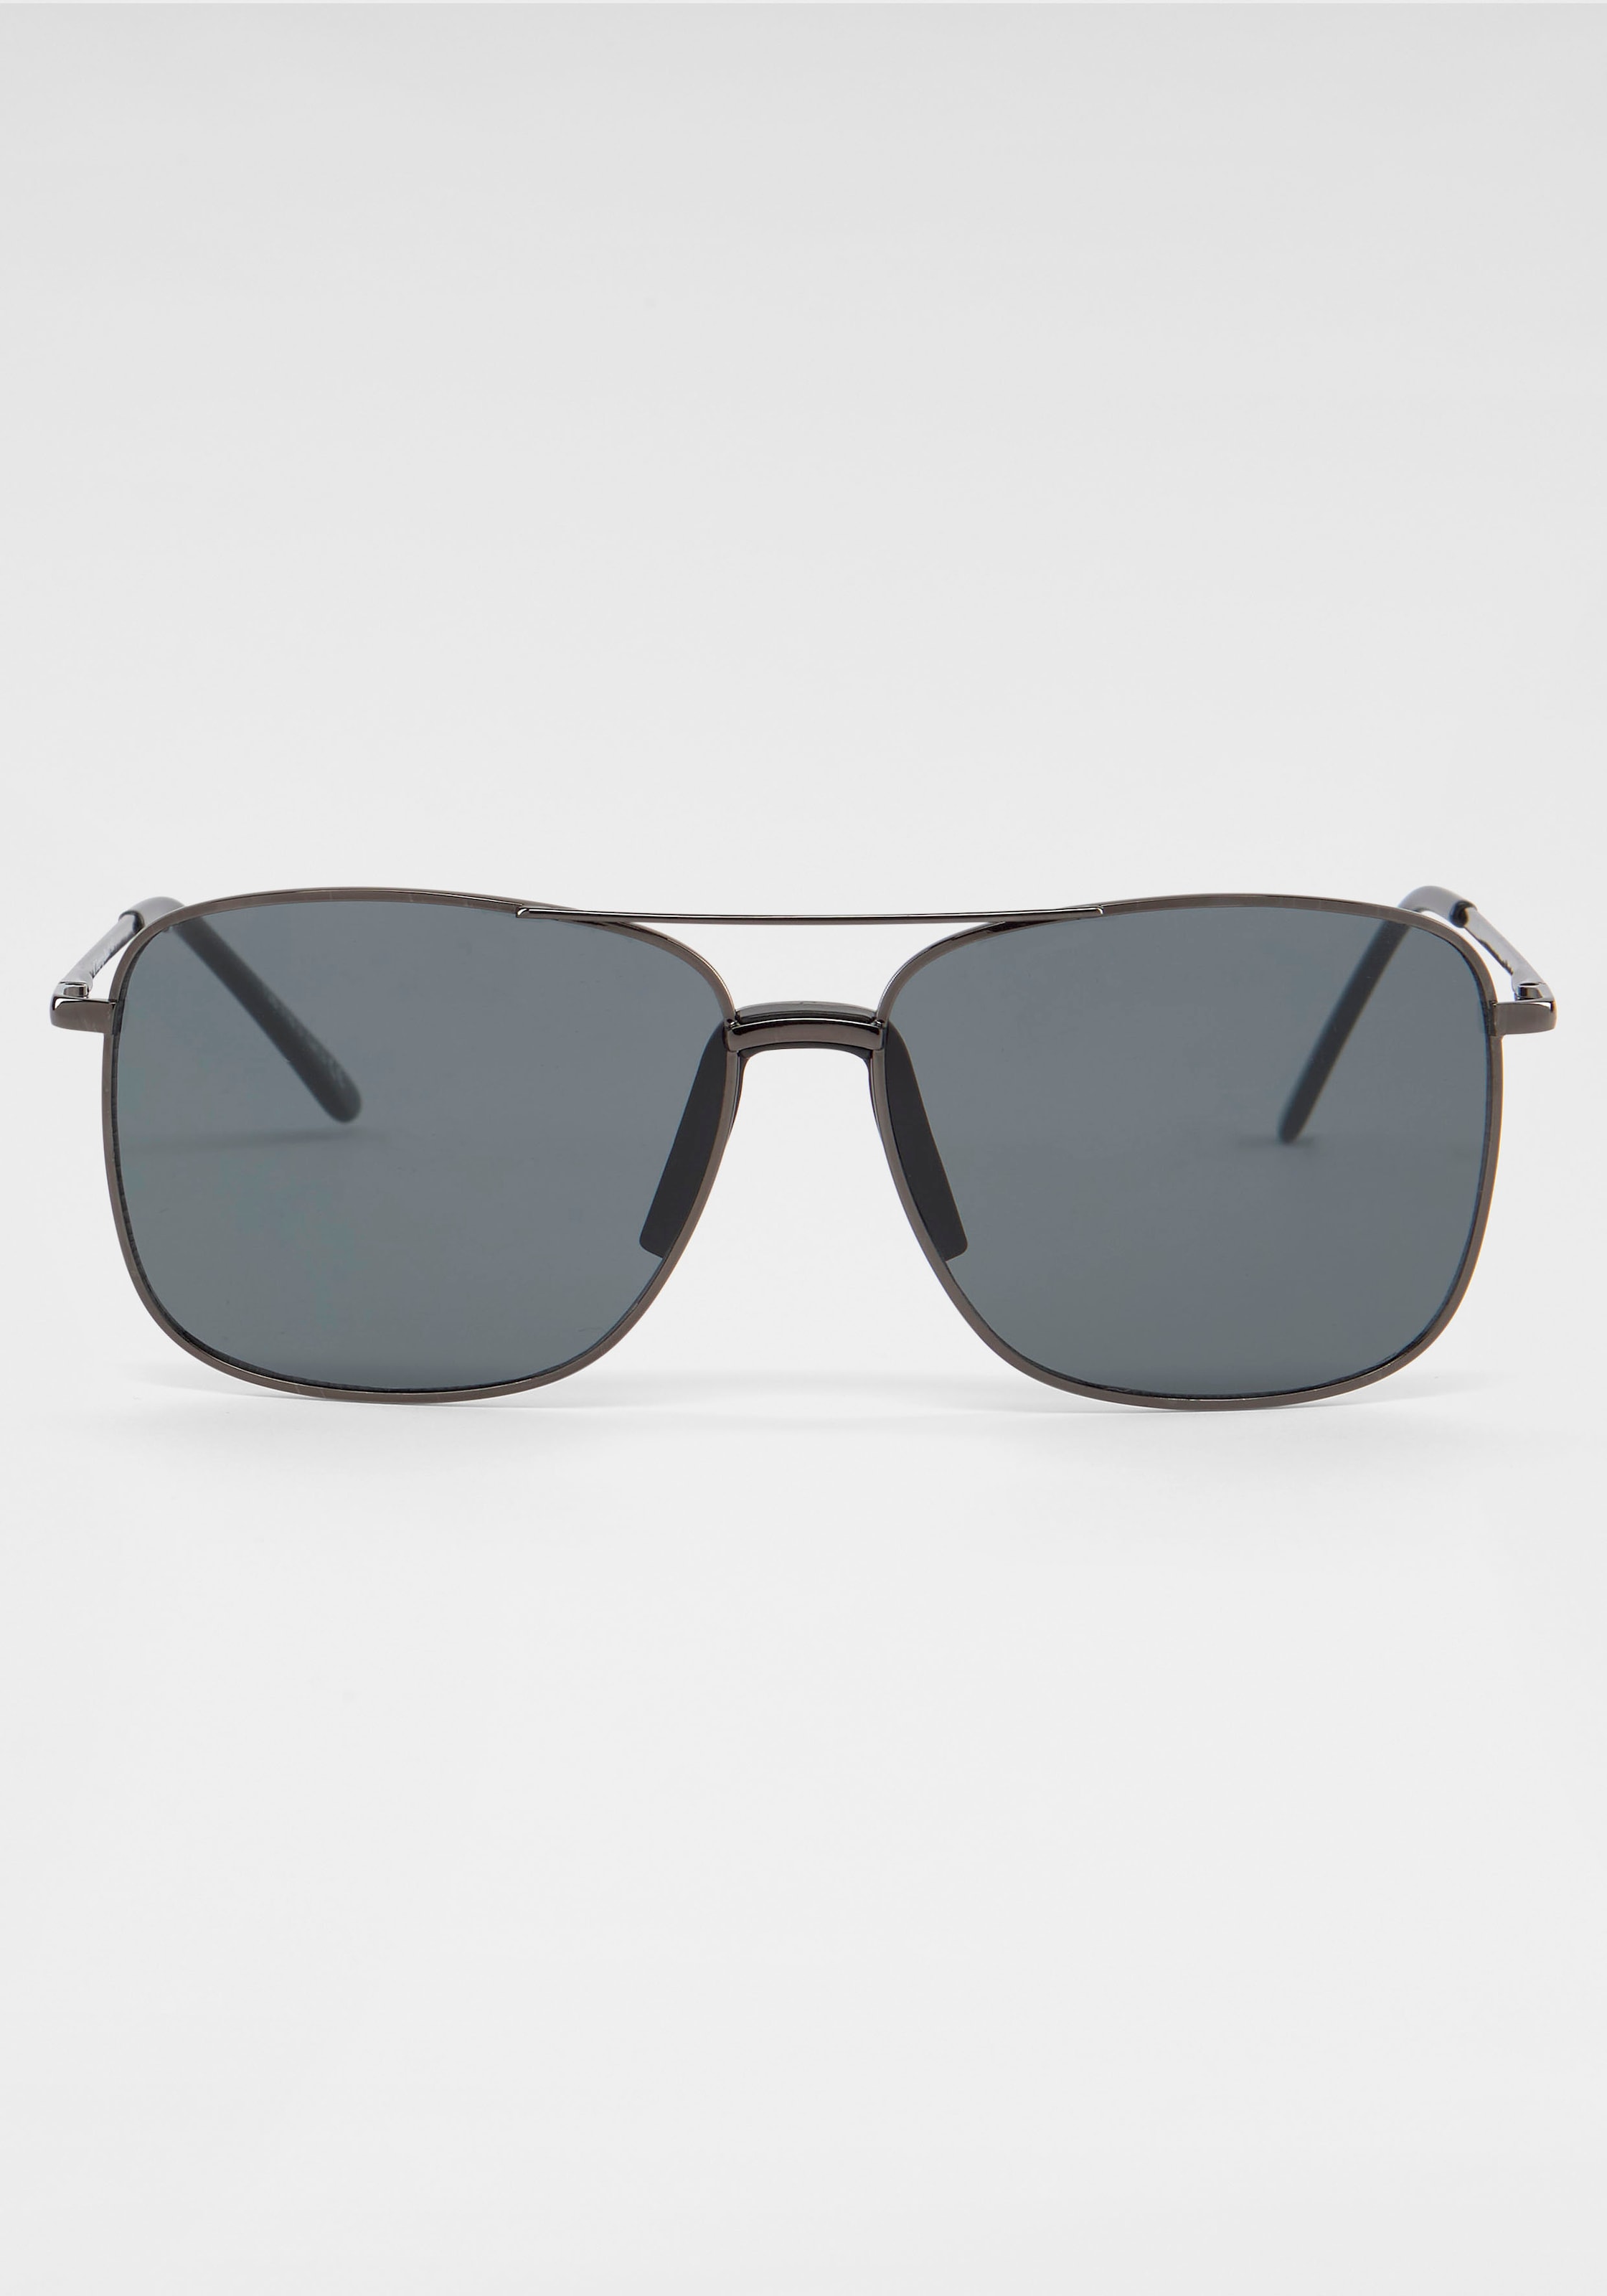 66 Feel | the ROUTE kaufen BAUR Freedom Sonnenbrille Eyewear